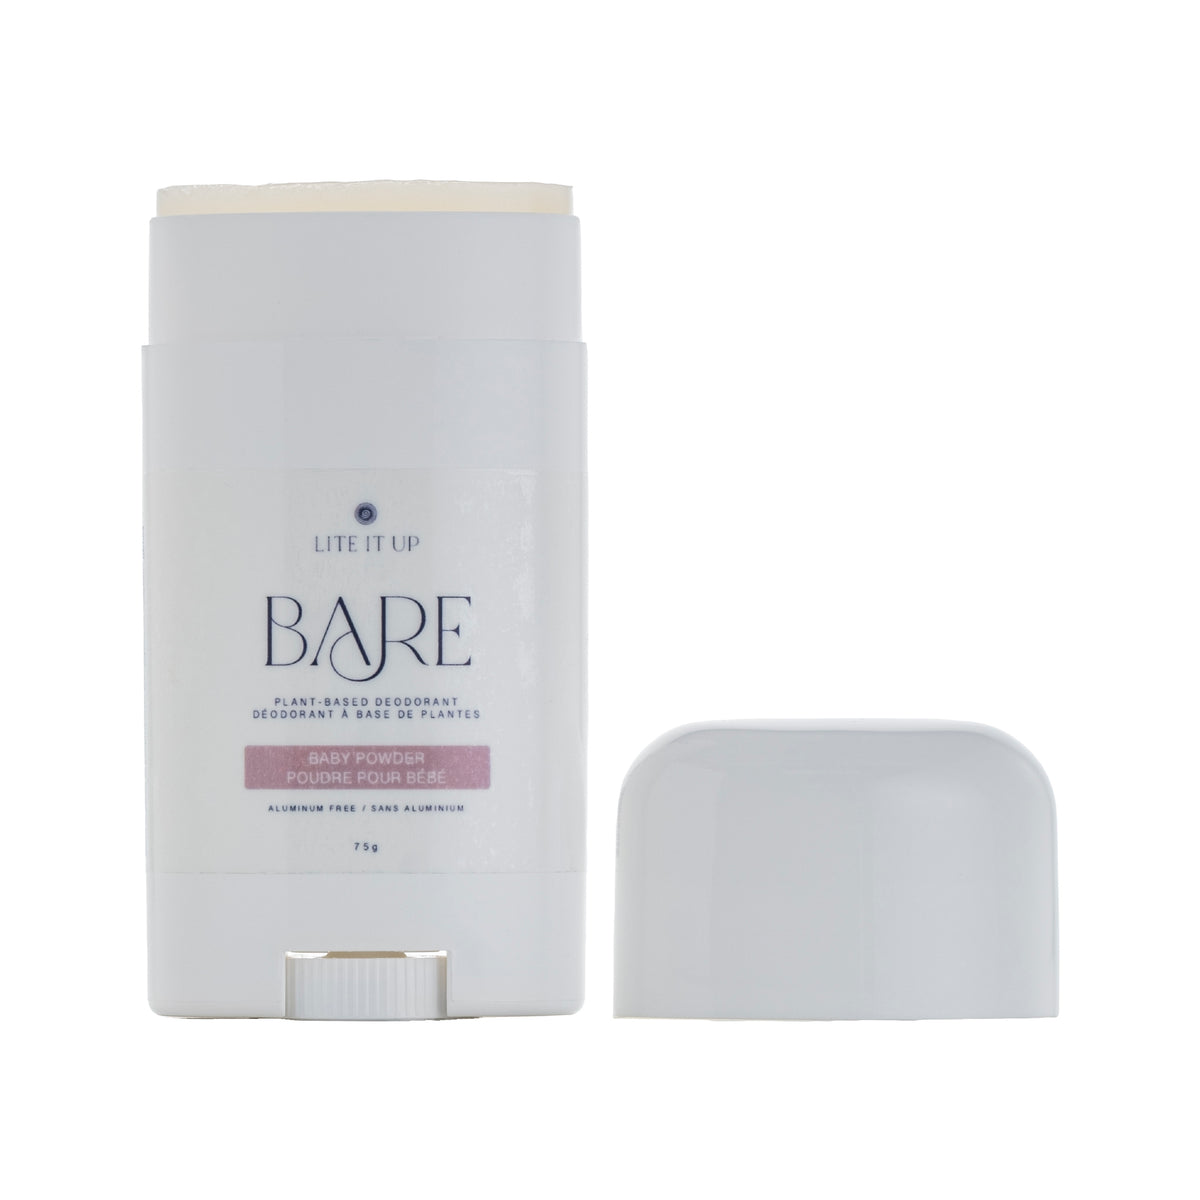 BARE - Plant Protein Deodorant - BABY POWDER